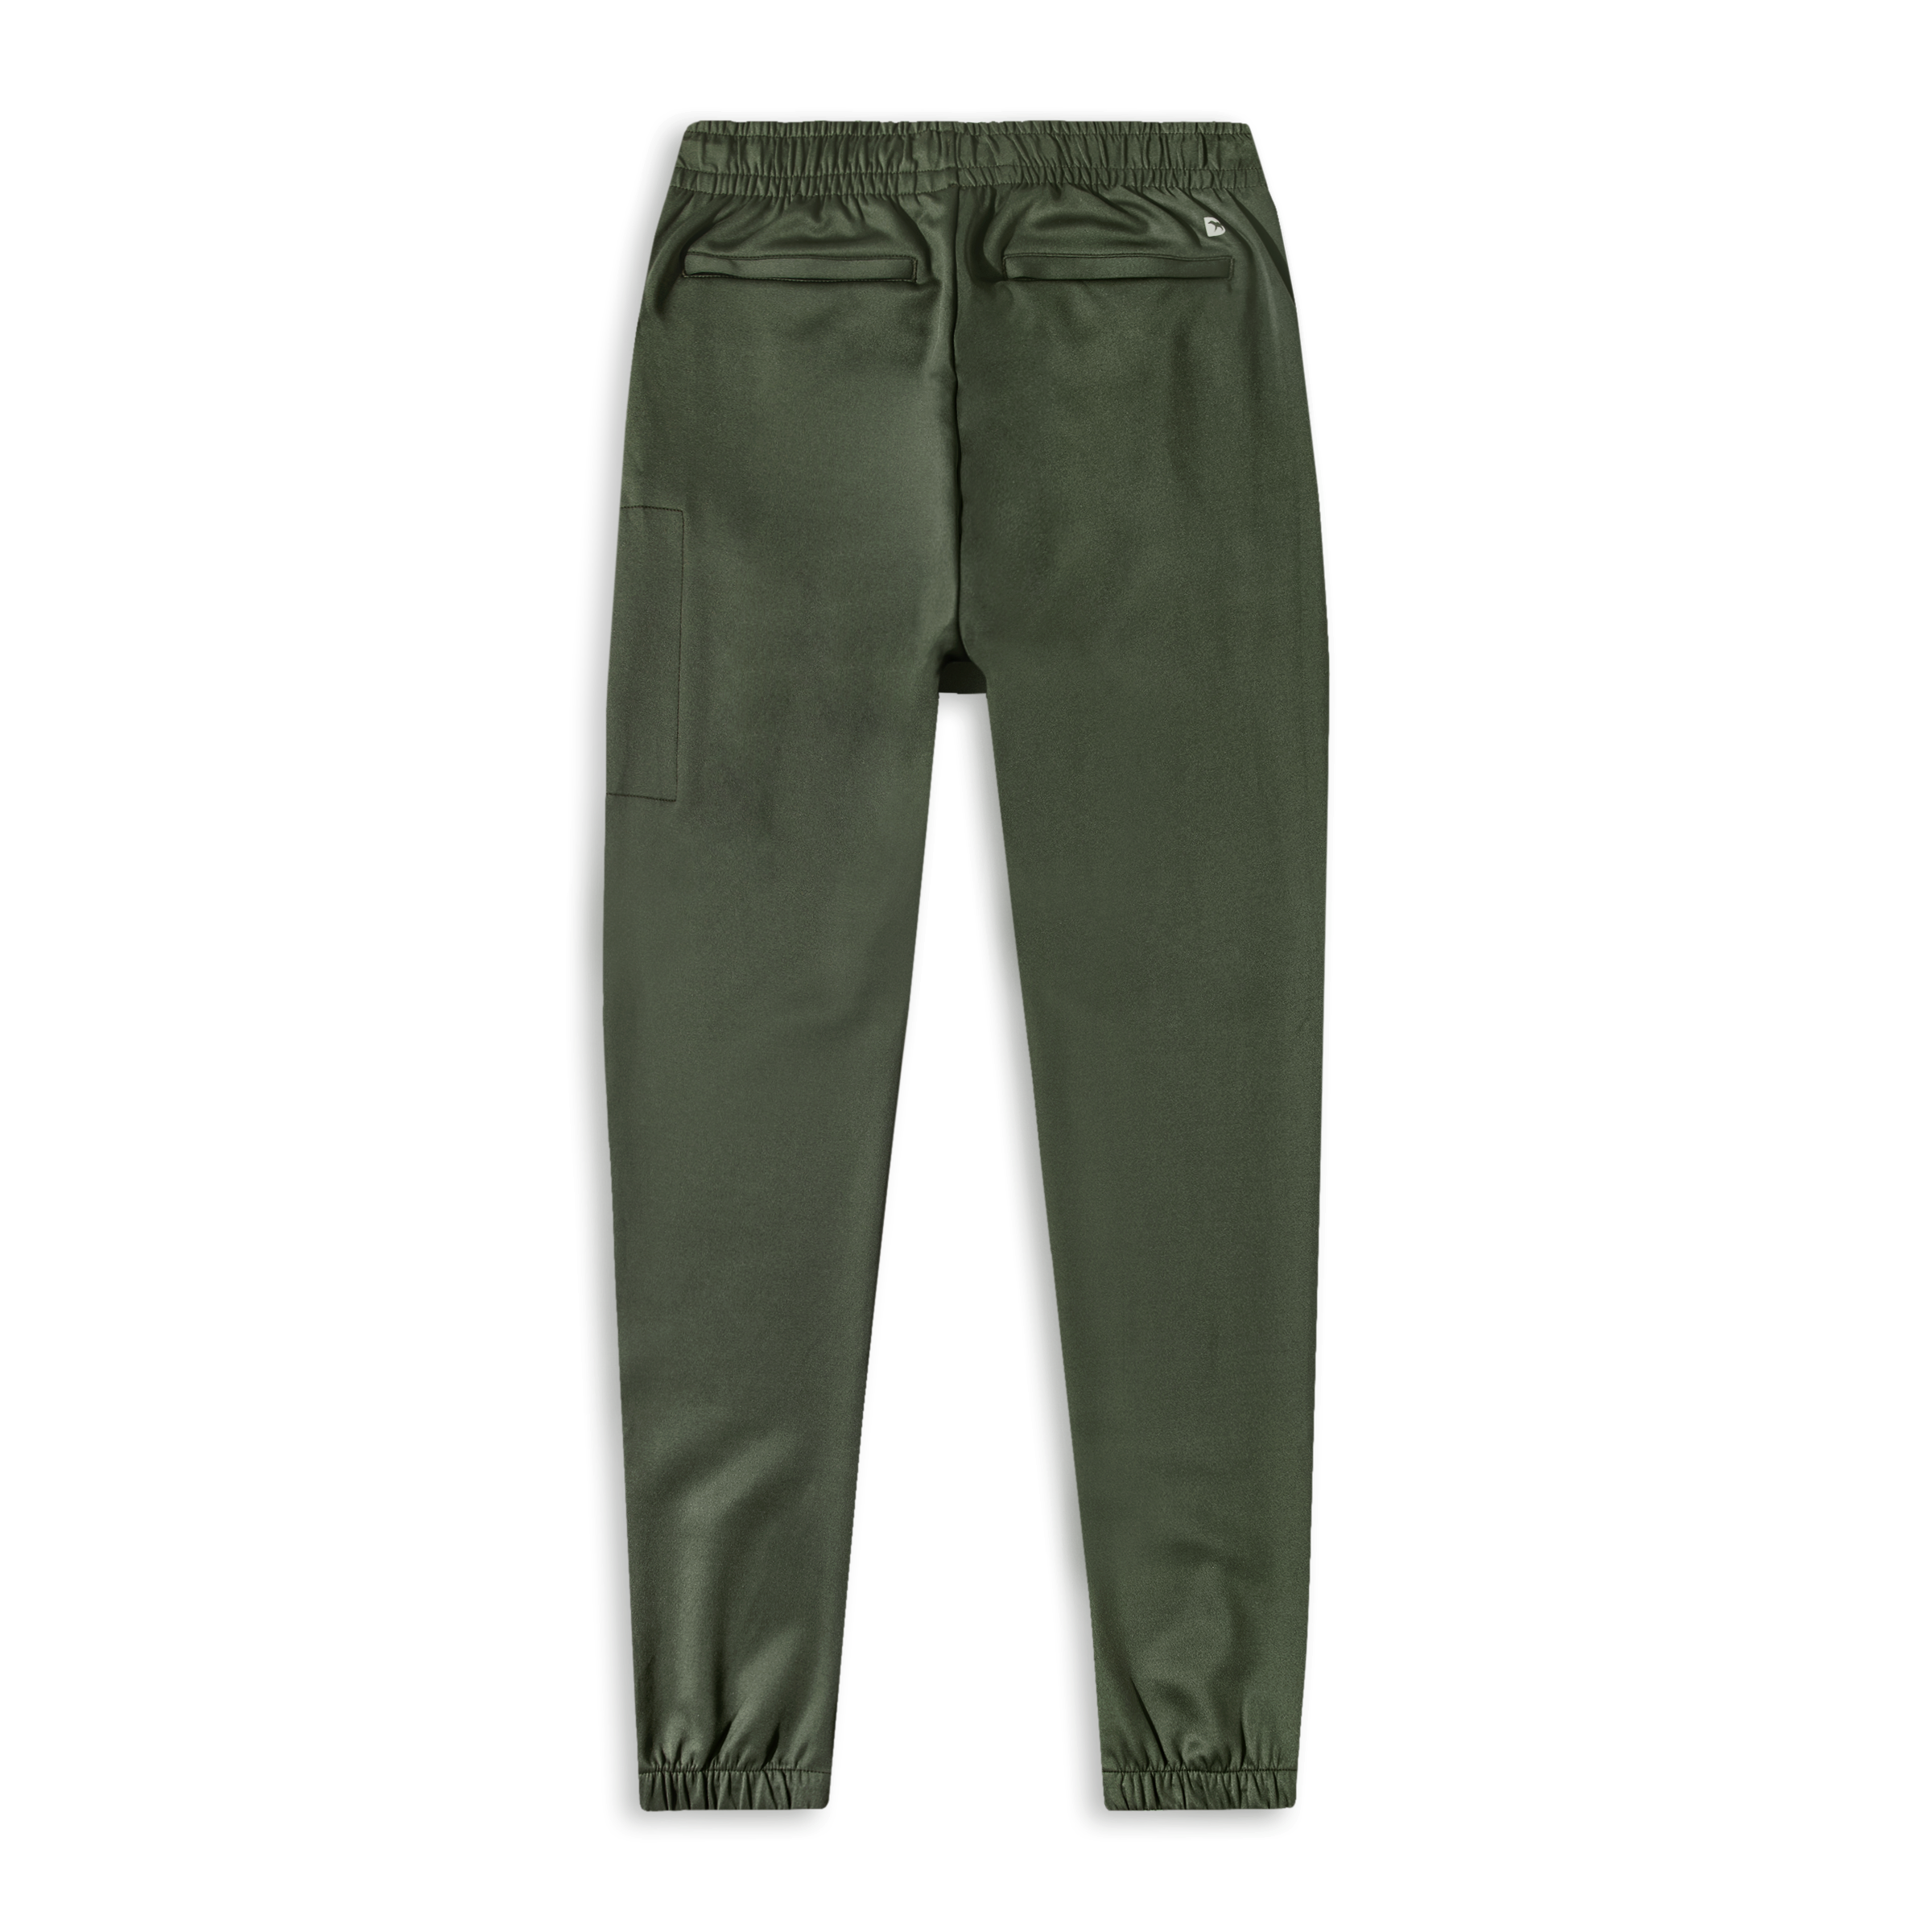 Scuba Jogger Military Green back with zipper pockets